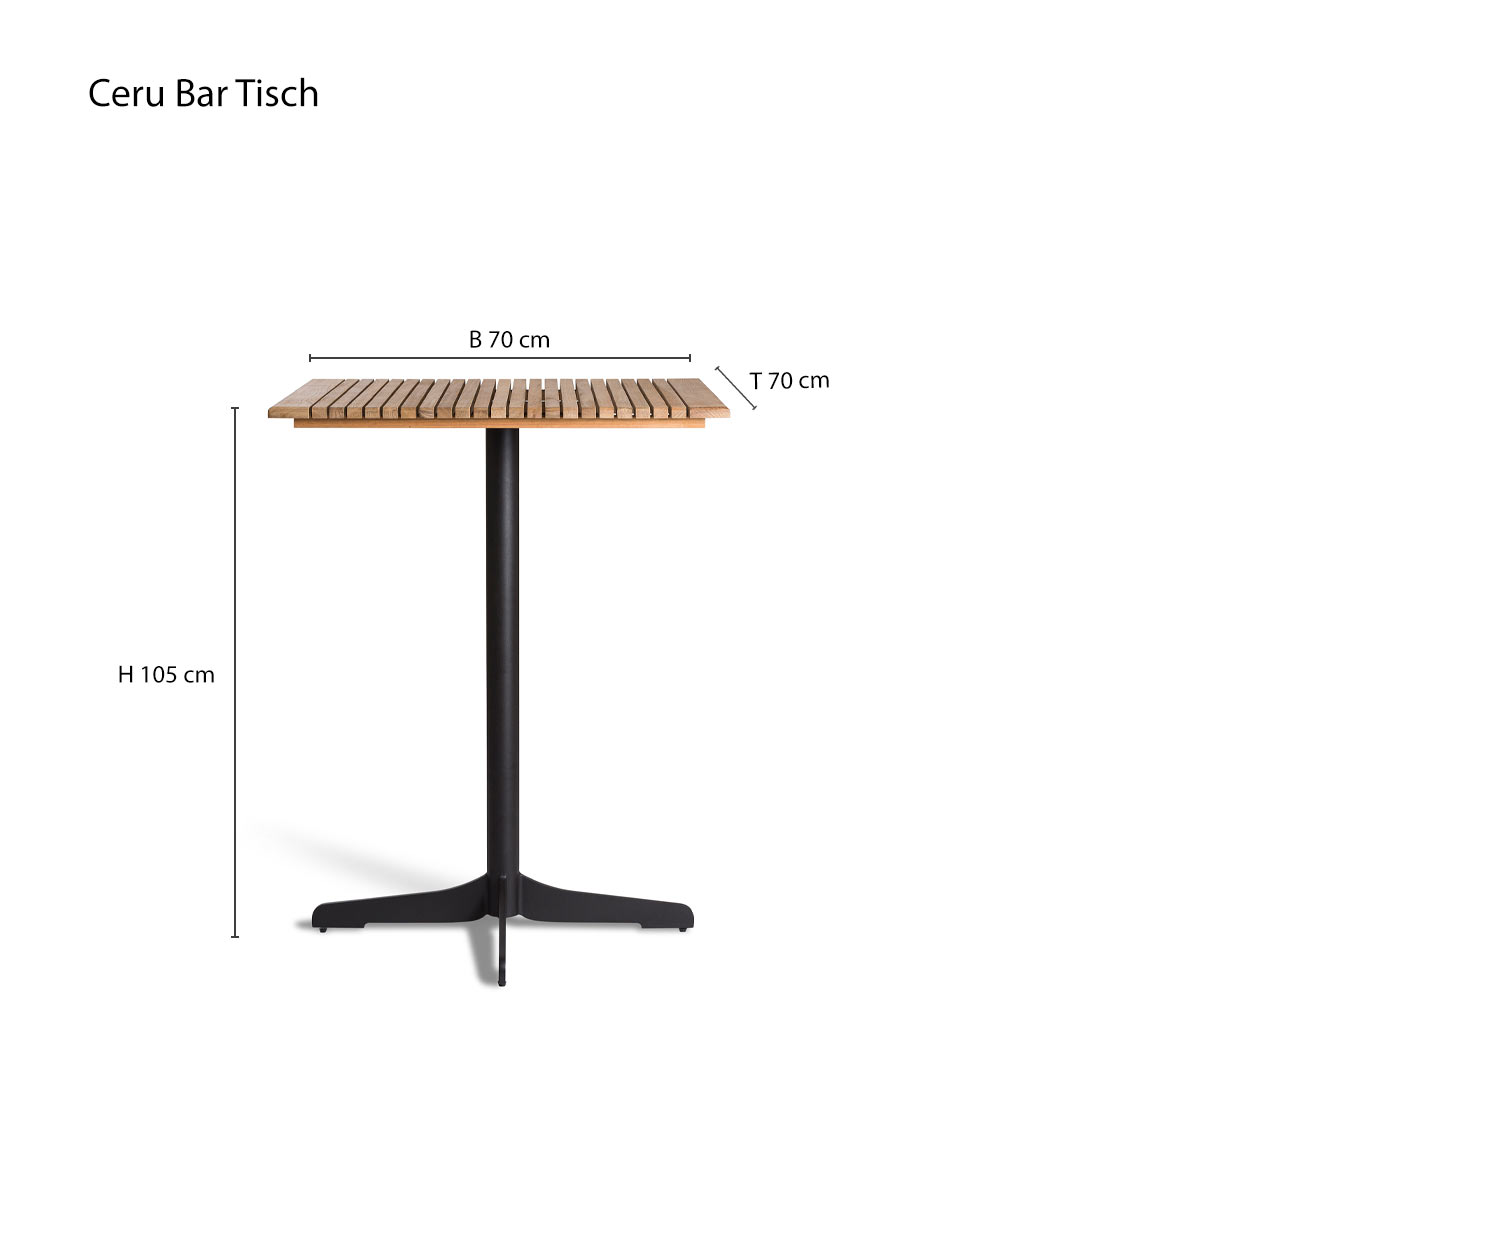 Table de bar Design Ceru de Oasiq Esquisse Dimensions Dimensions